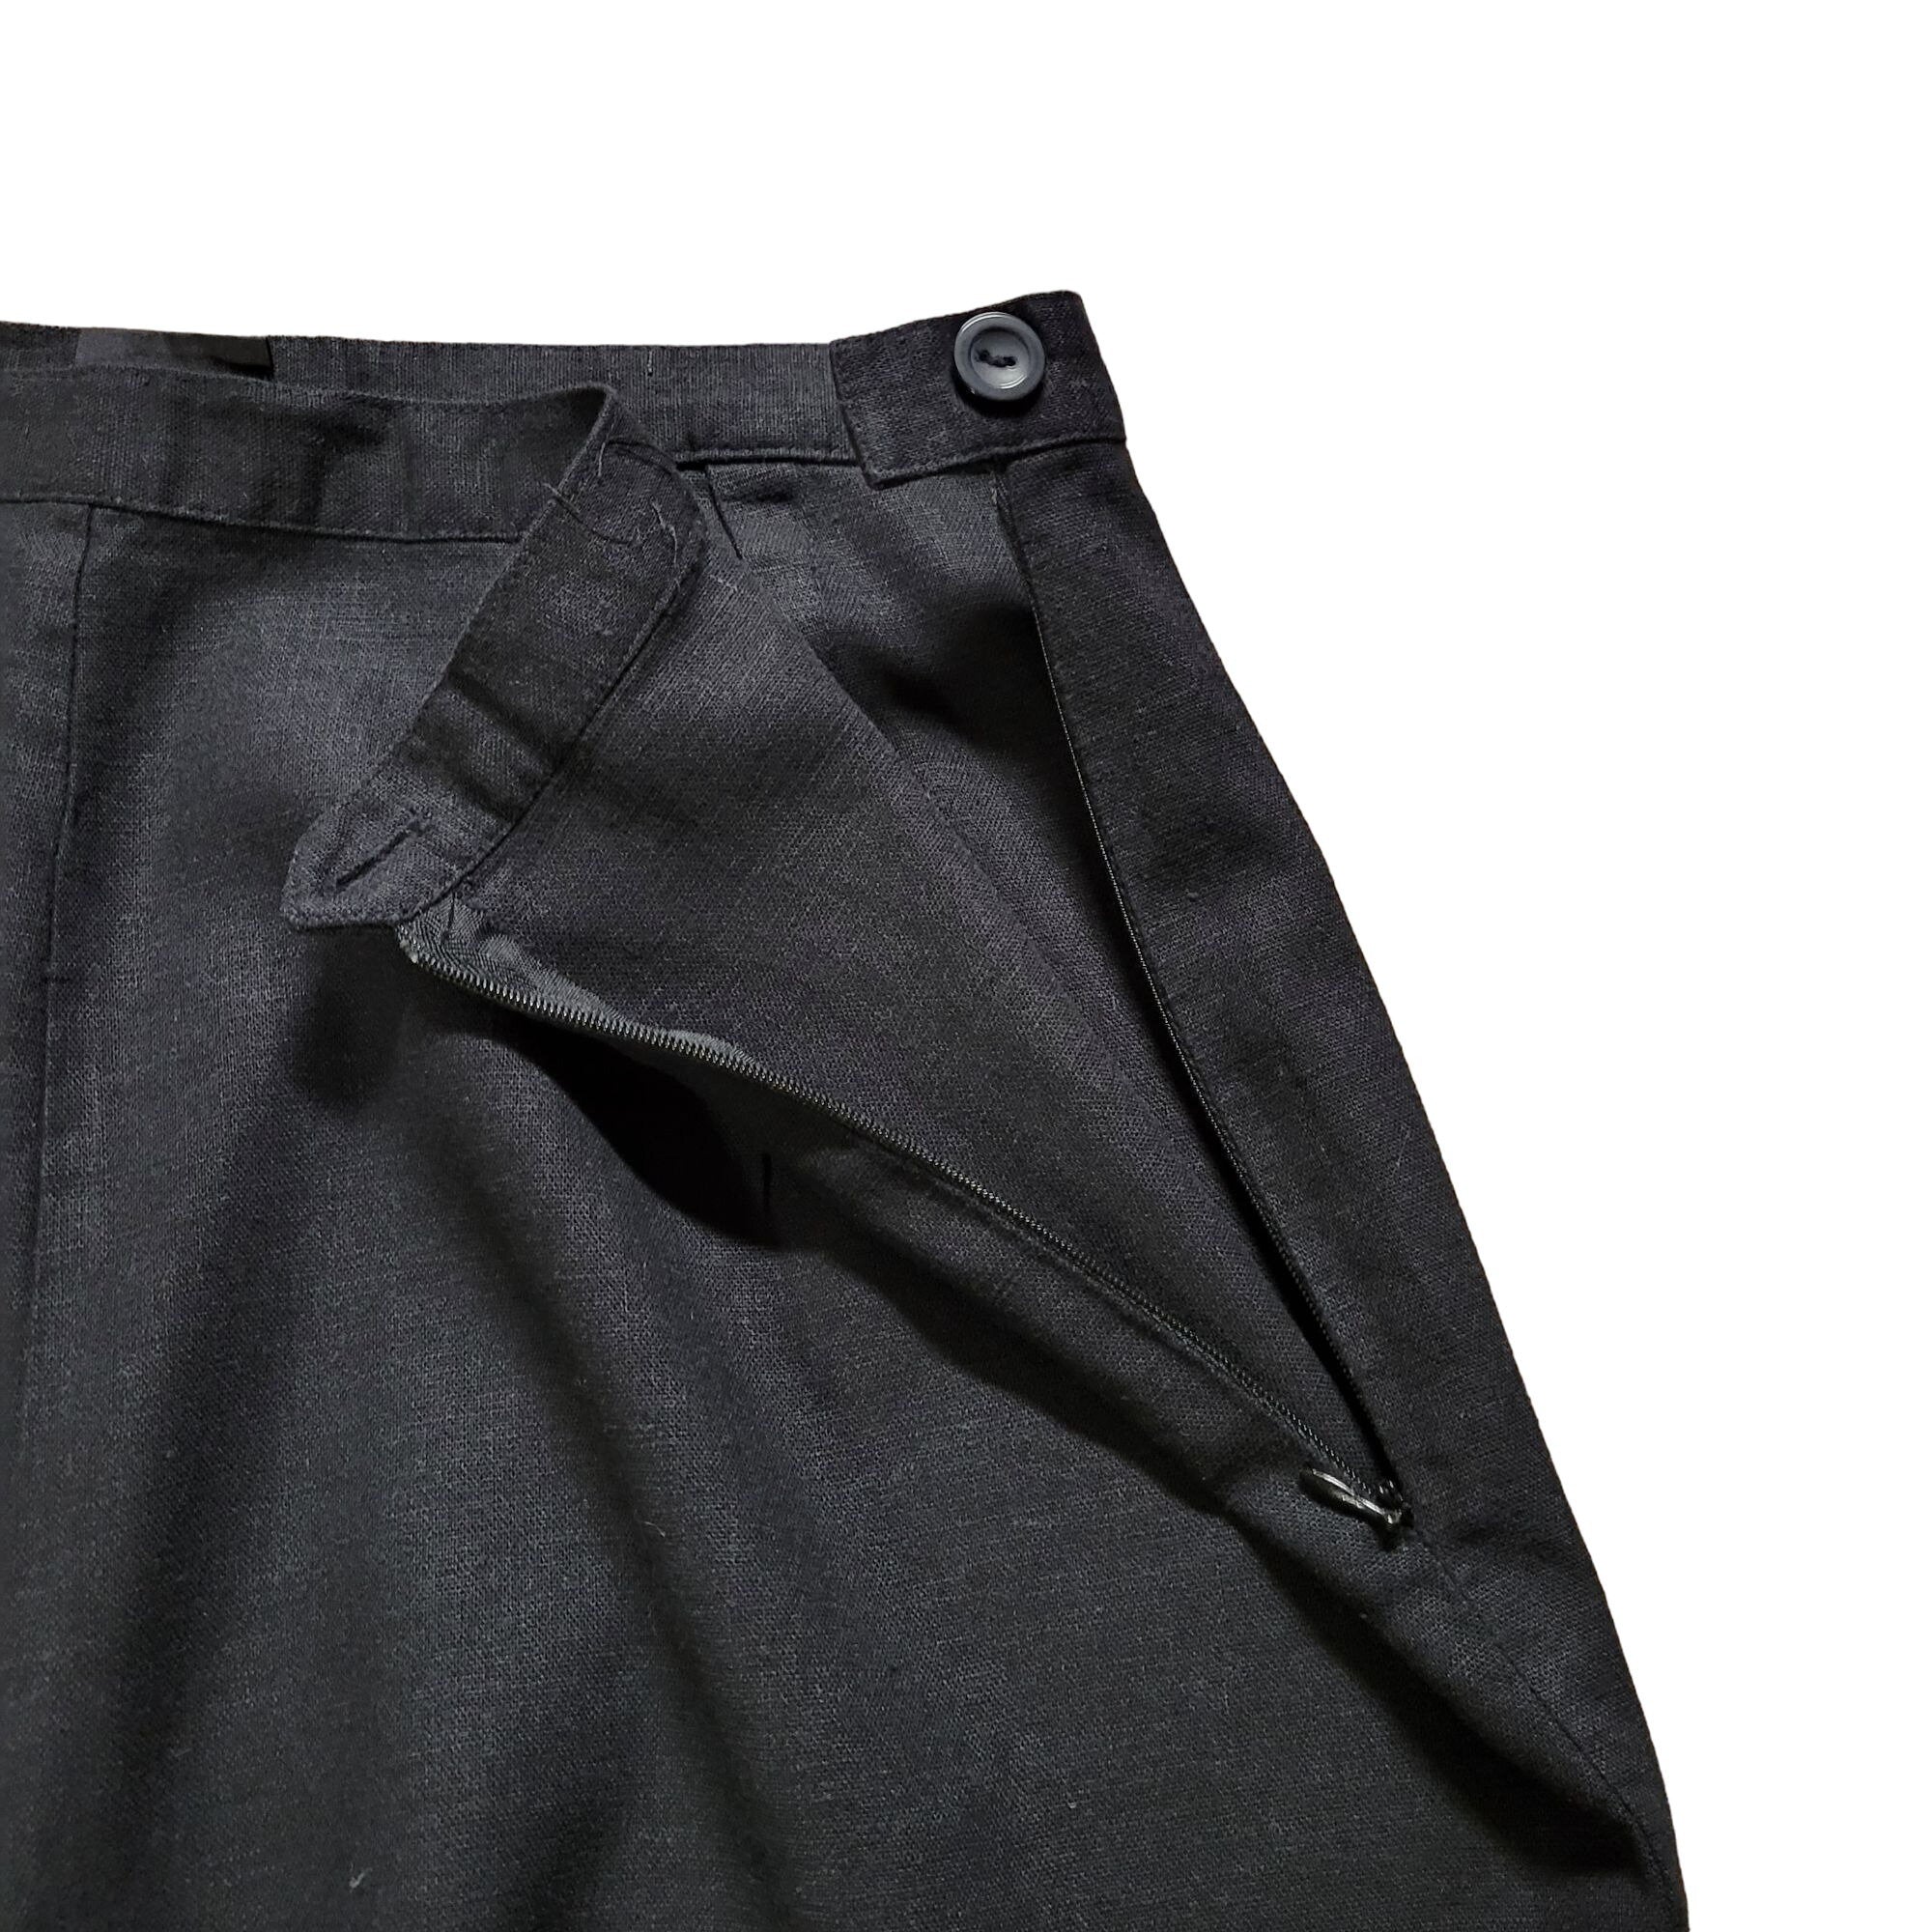 Citi Dress Brand. Solid Black Linen Blend Women's Capri Pants, Size 14